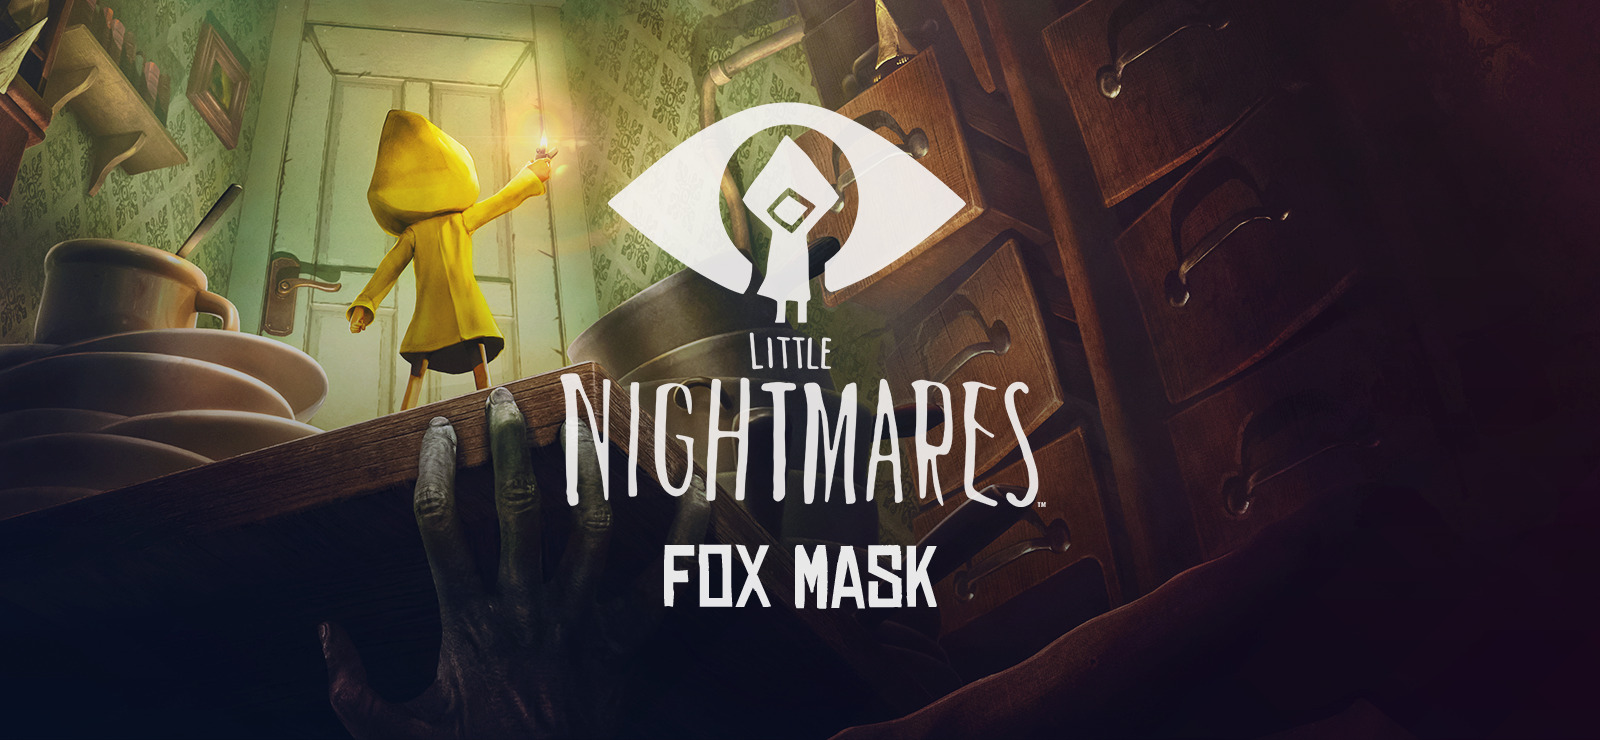 Little Nightmares - Fox Mask